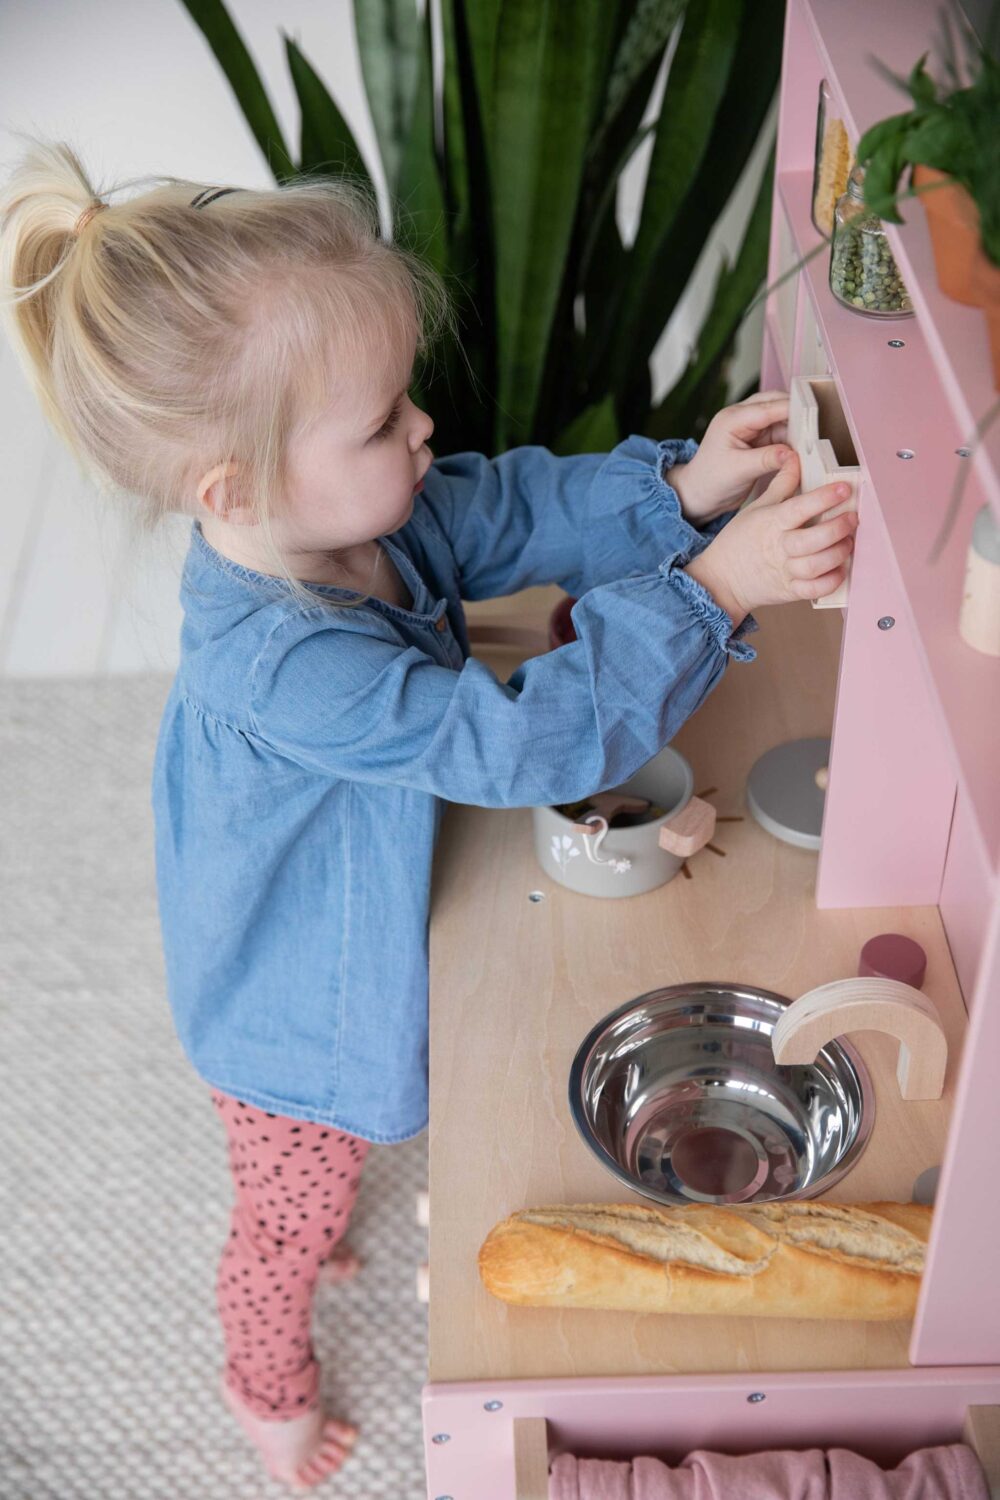 Little Dutch Wooden toy kitchen with accessories (pink)